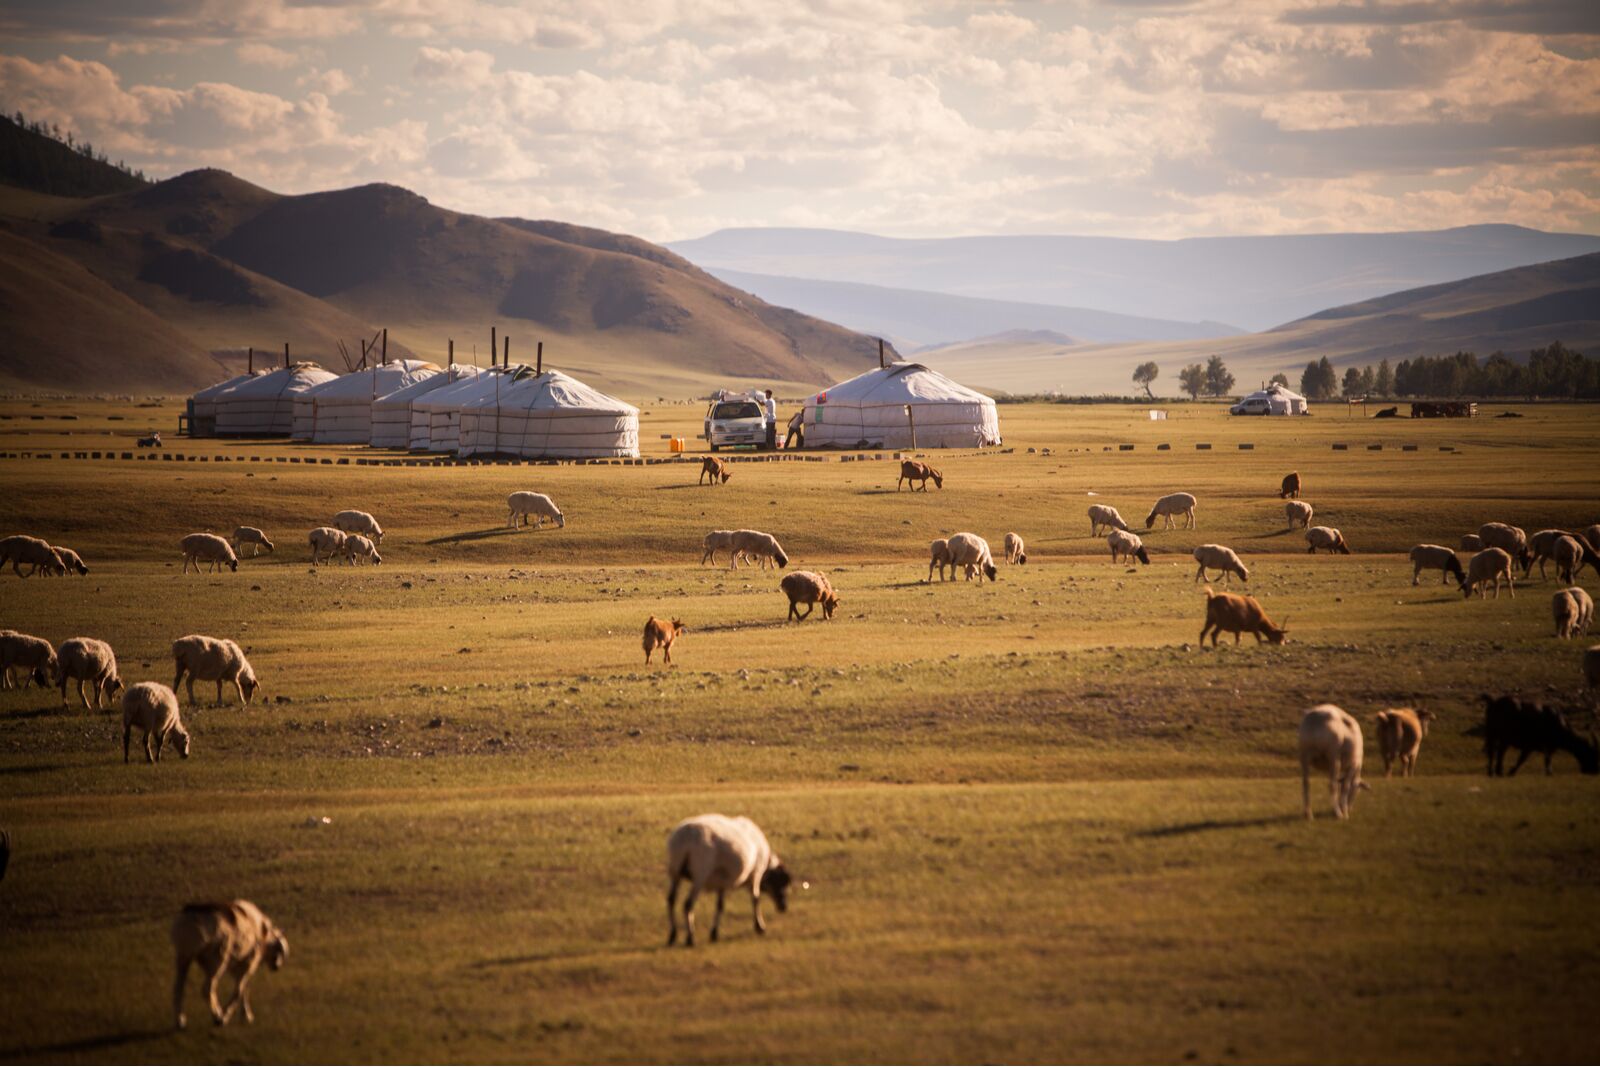 Gers in a field in Mongolia